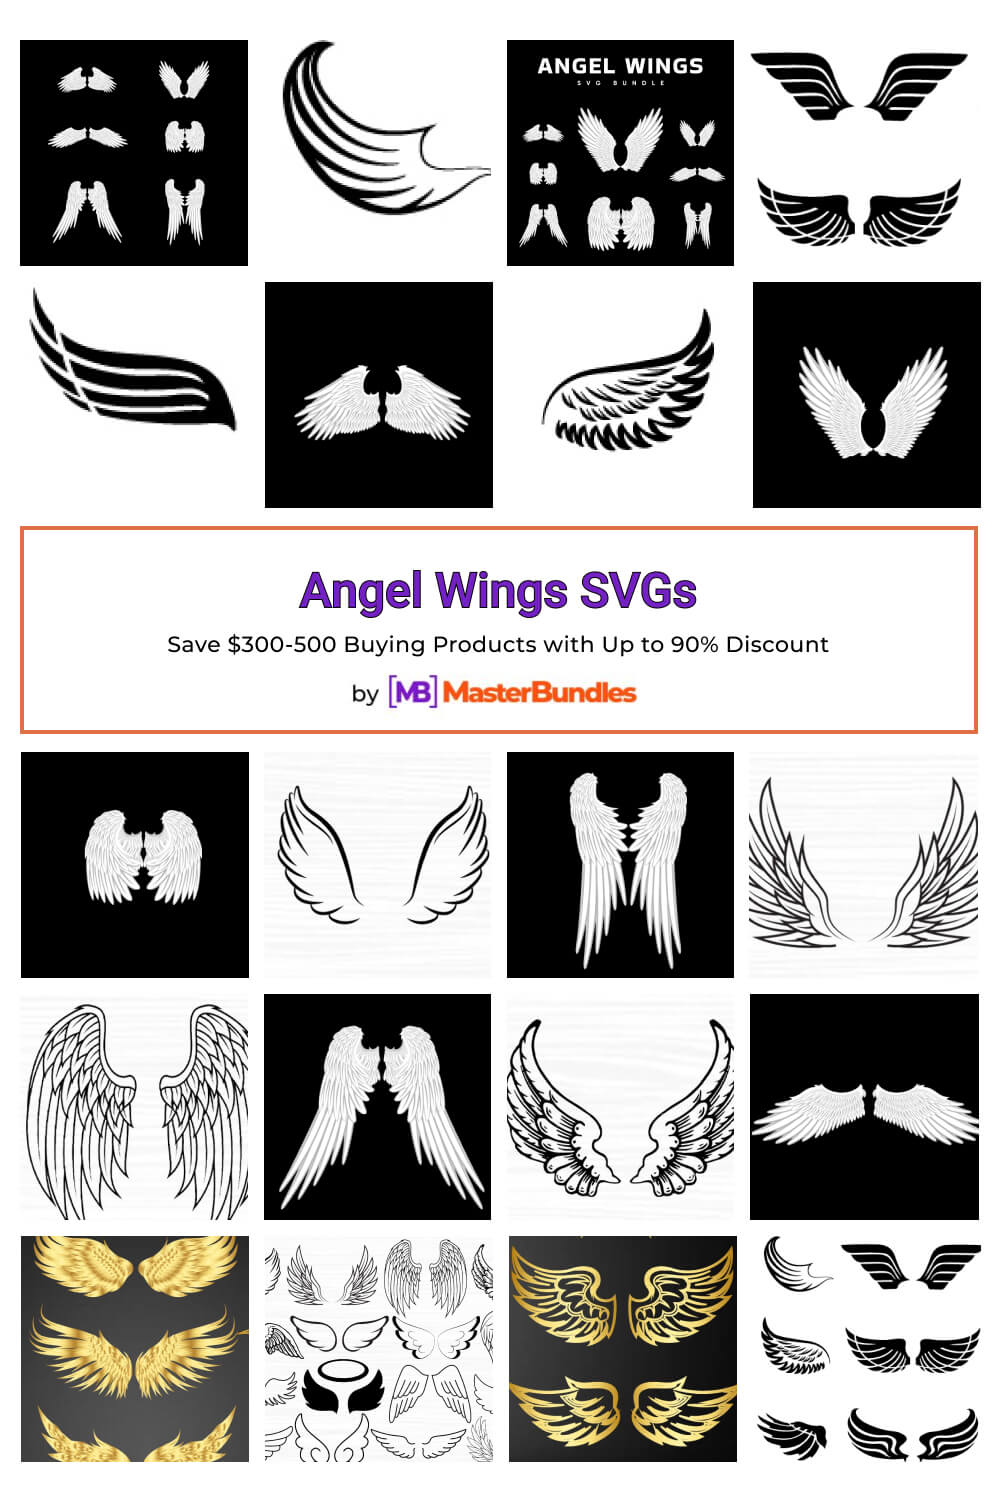 angel wings svgs pinterest image.